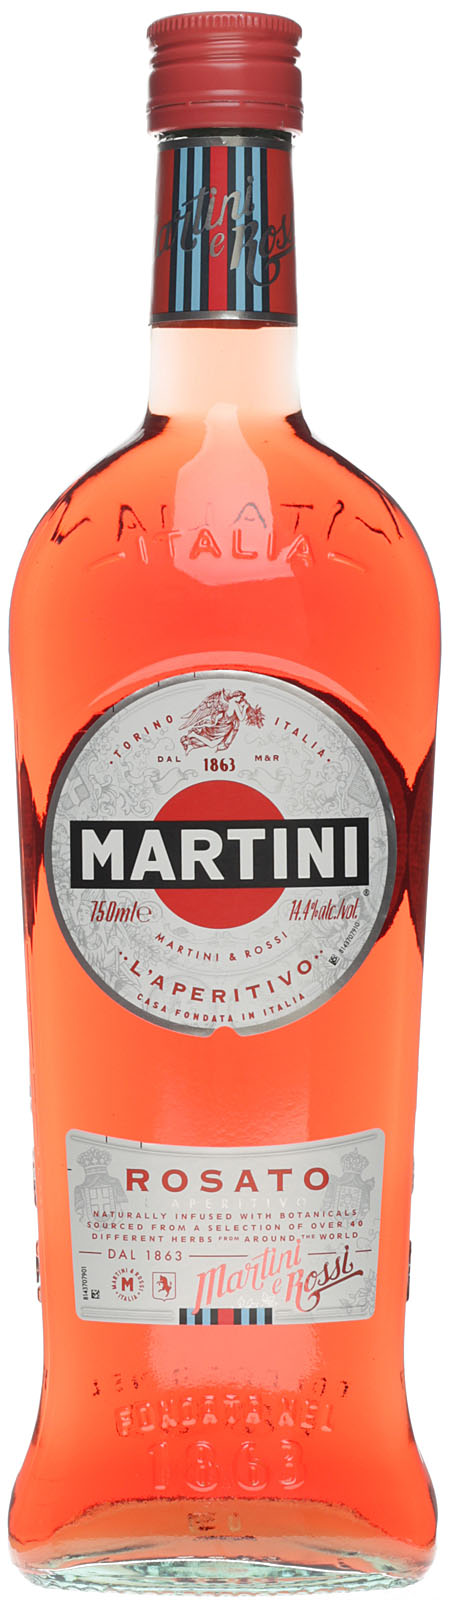 14,4 Vol. Shop Martini im Liter 0,75 Rosato %